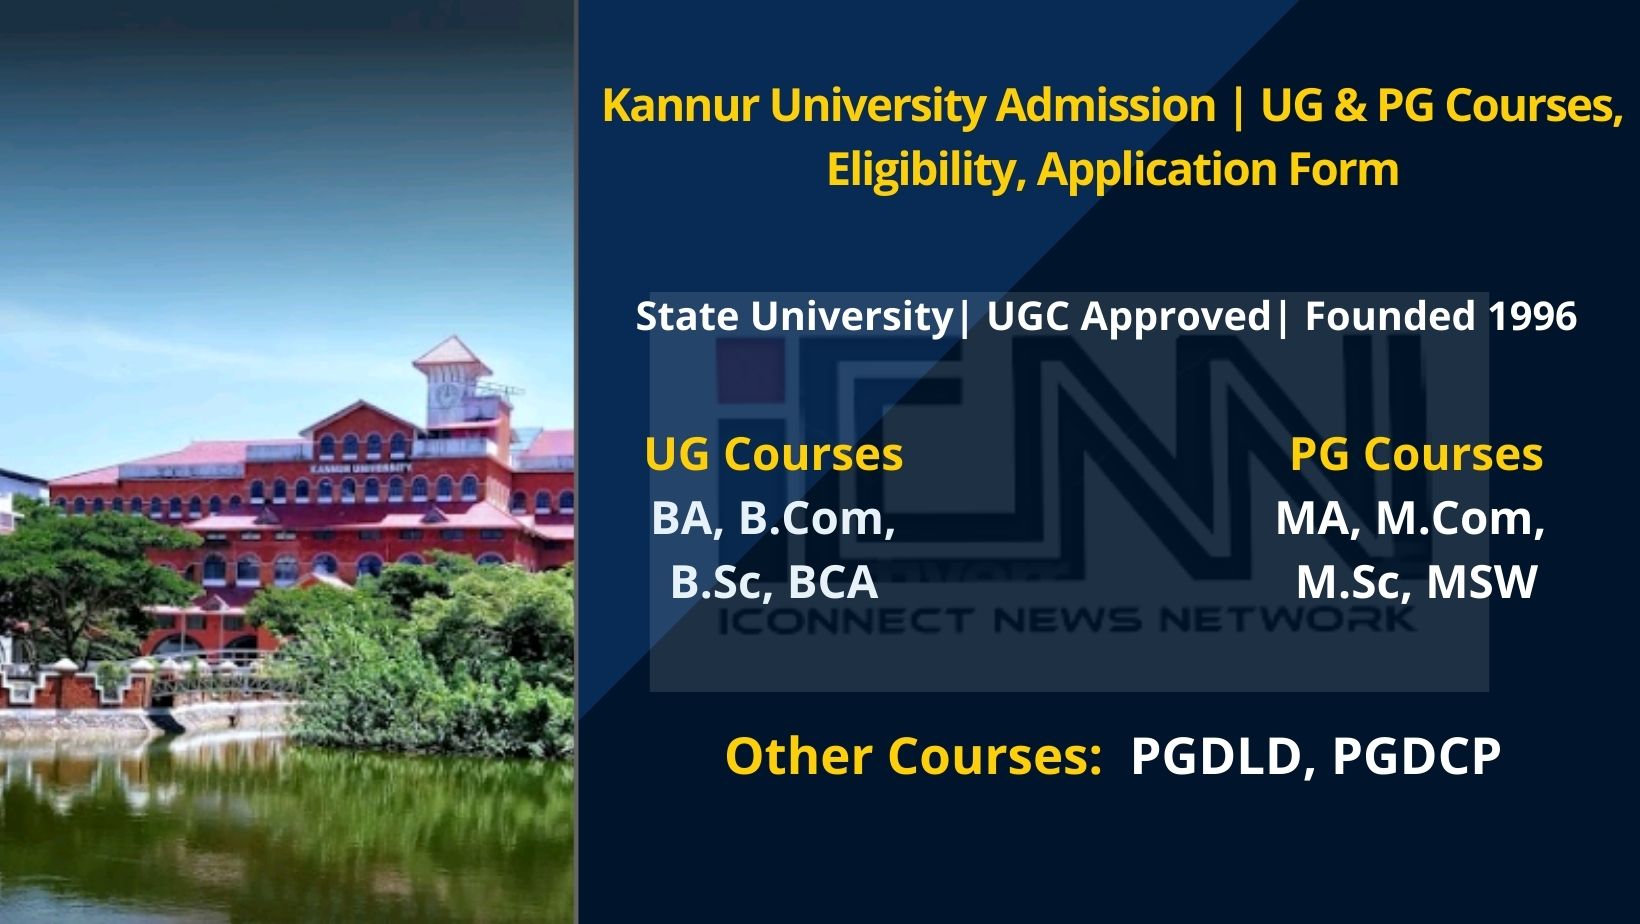 phd admission kannur university